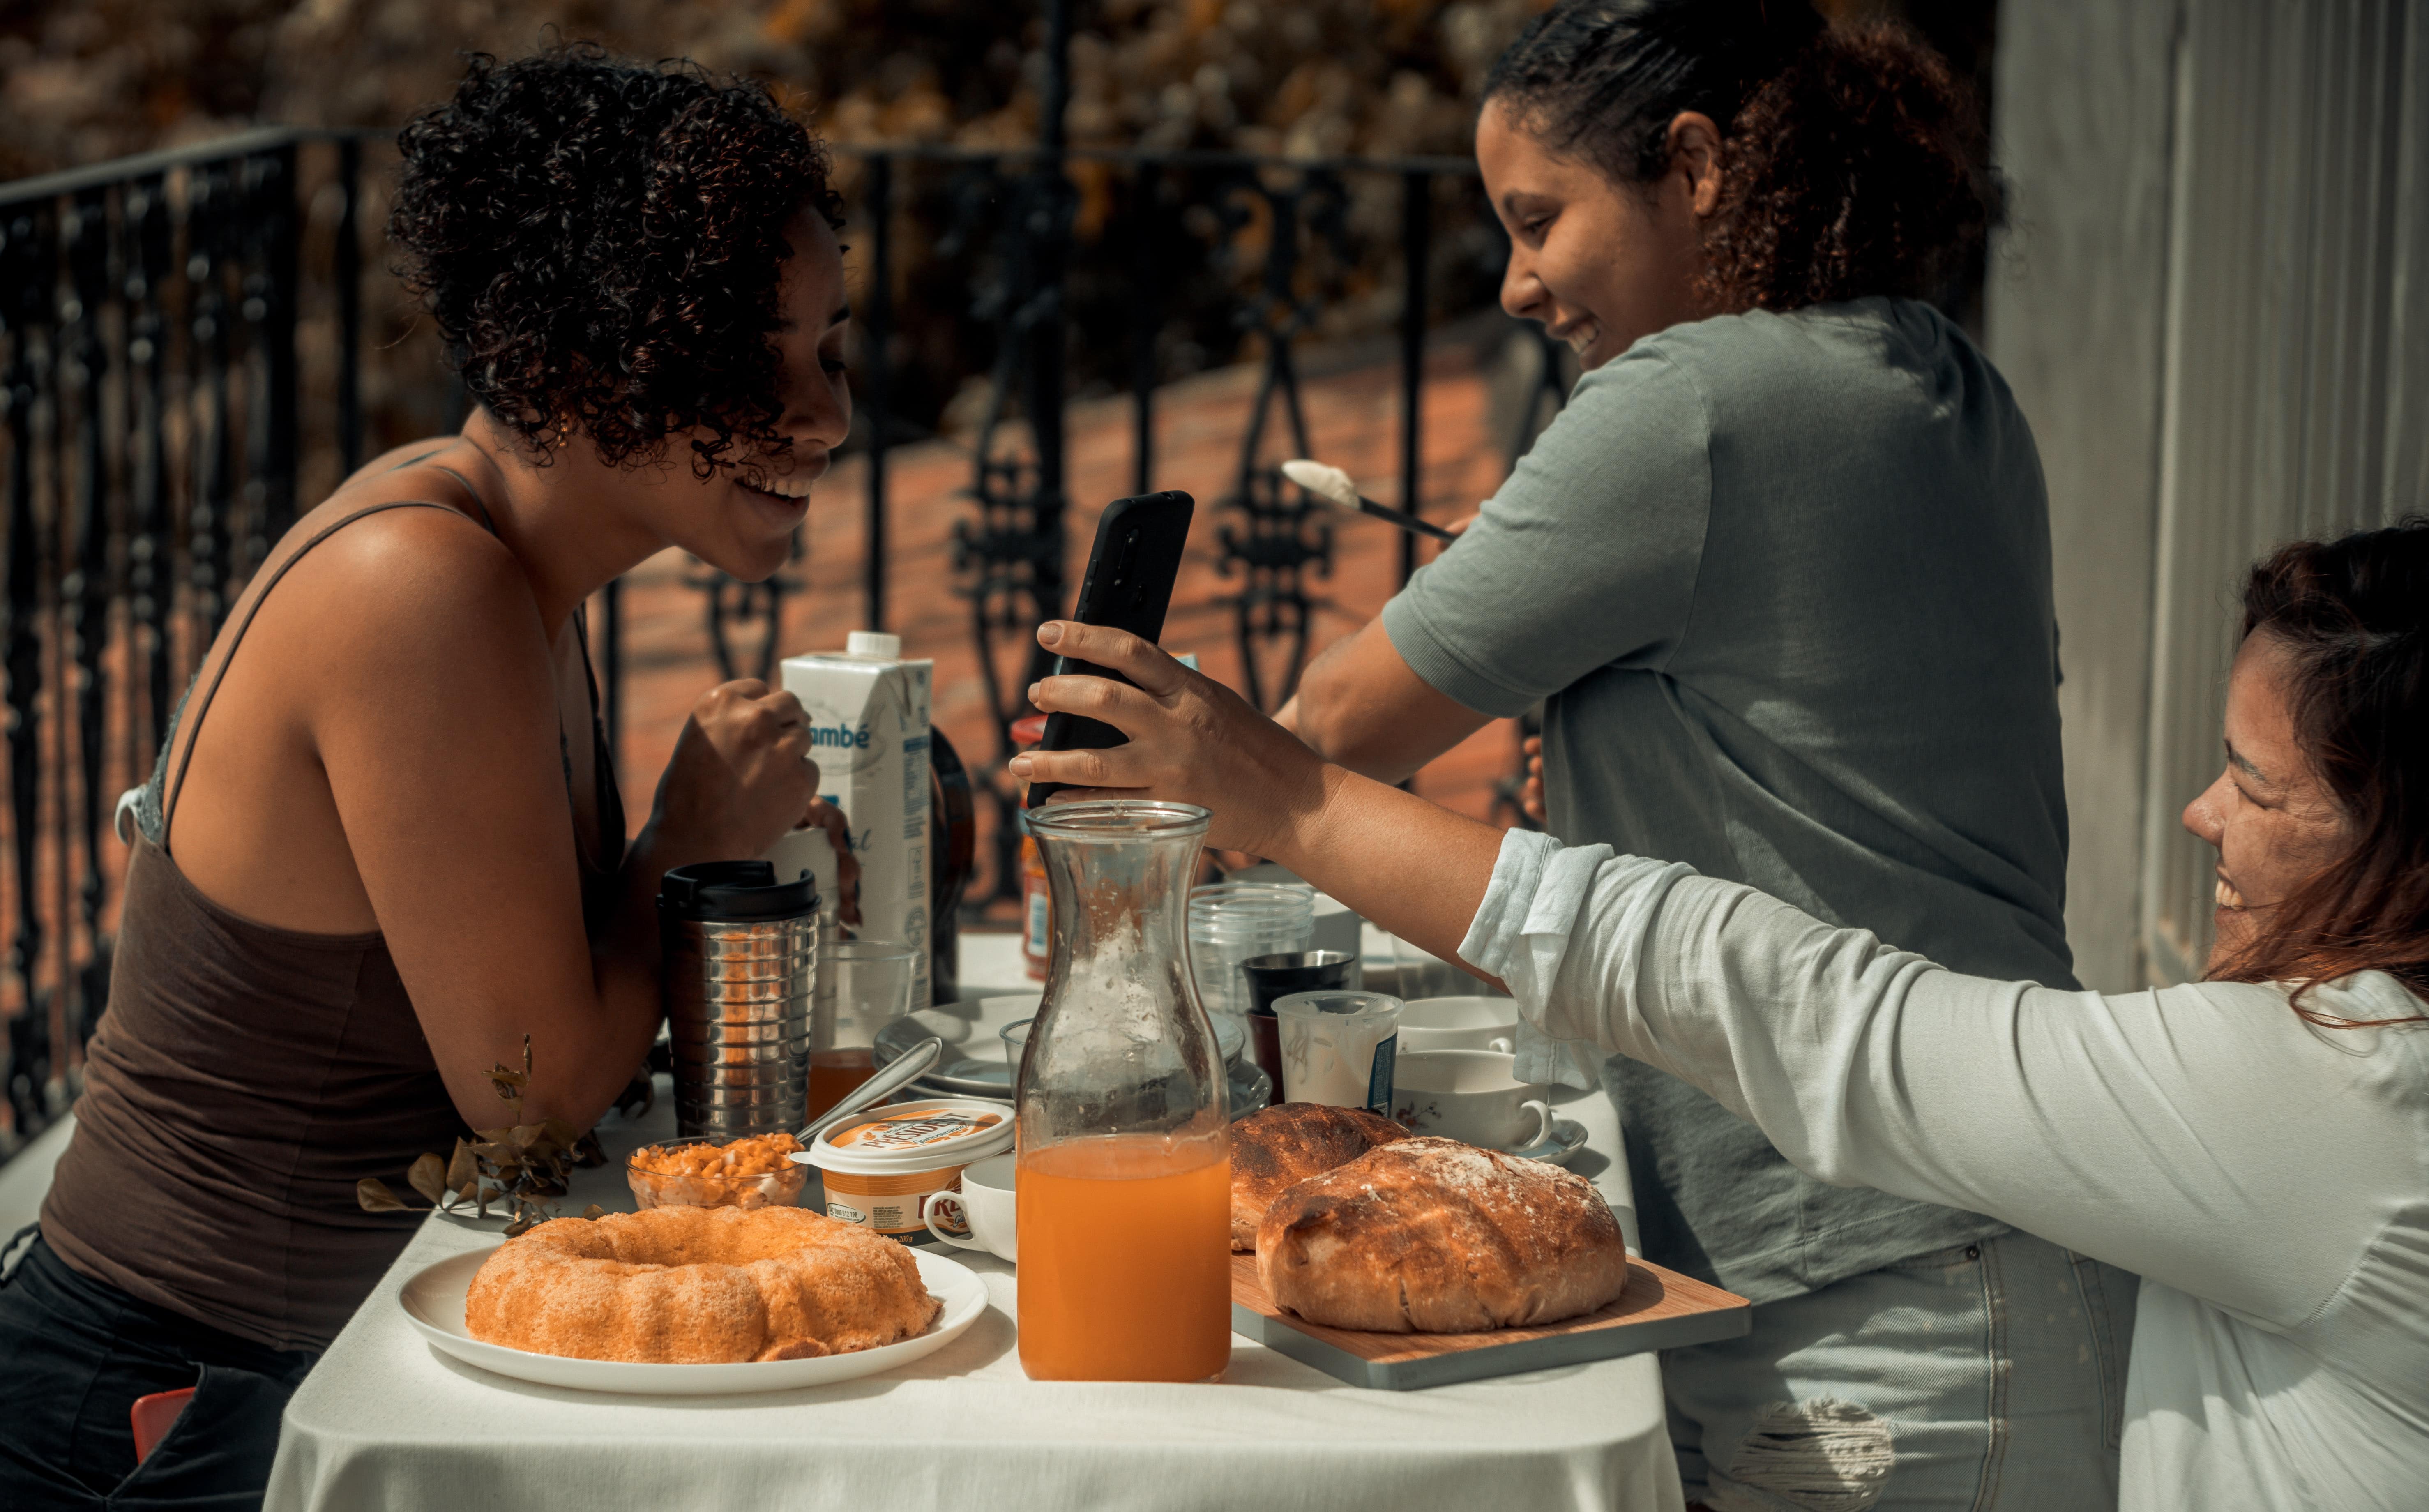 3 women sat on a terrace eating brunch together. 